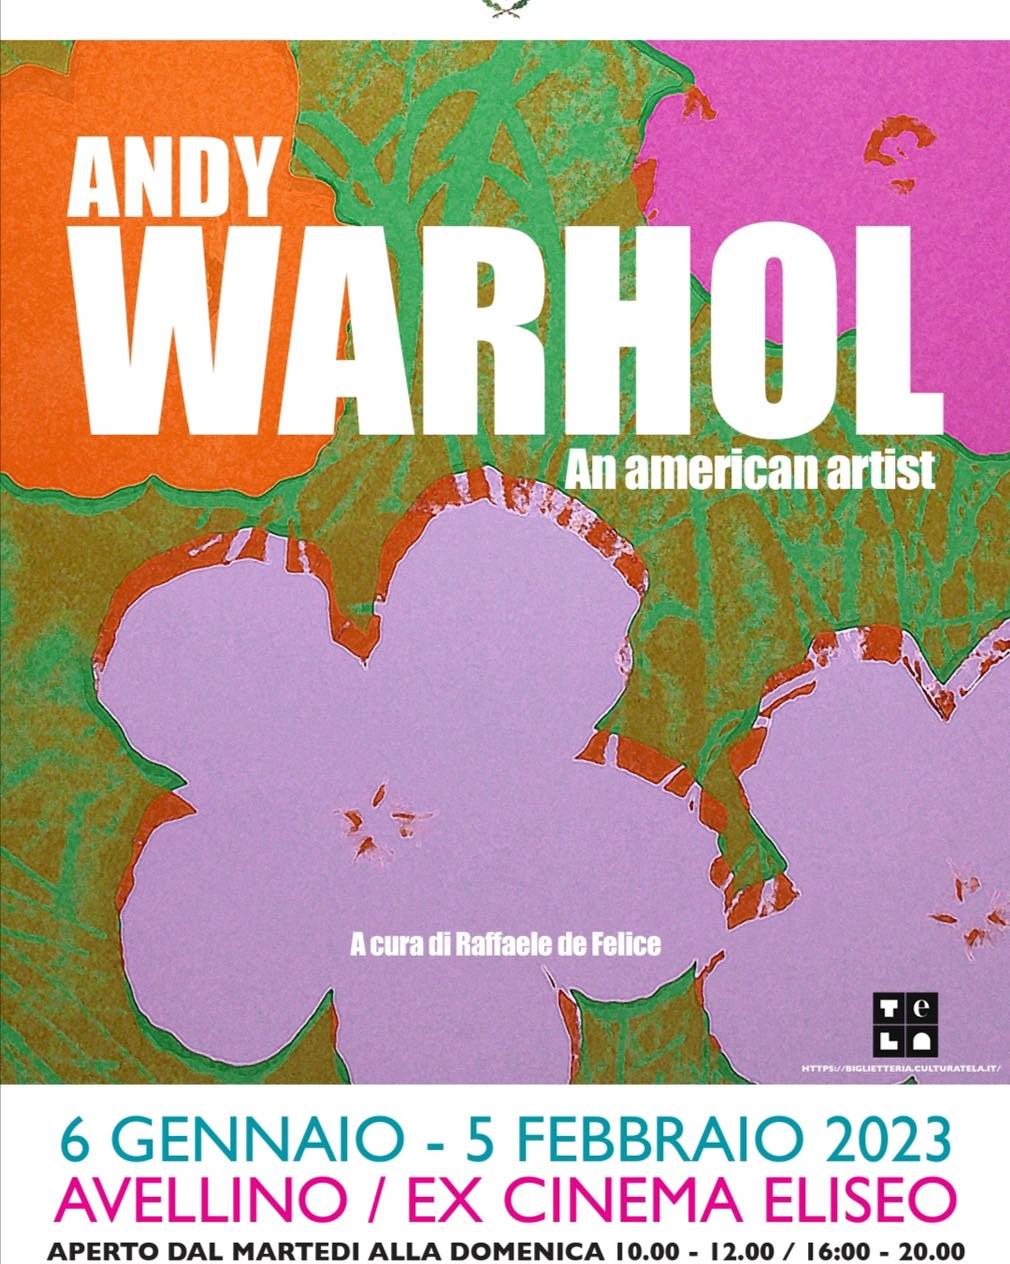 Avellino| All’ex Eliseo apre la mostra di Andy Warhol